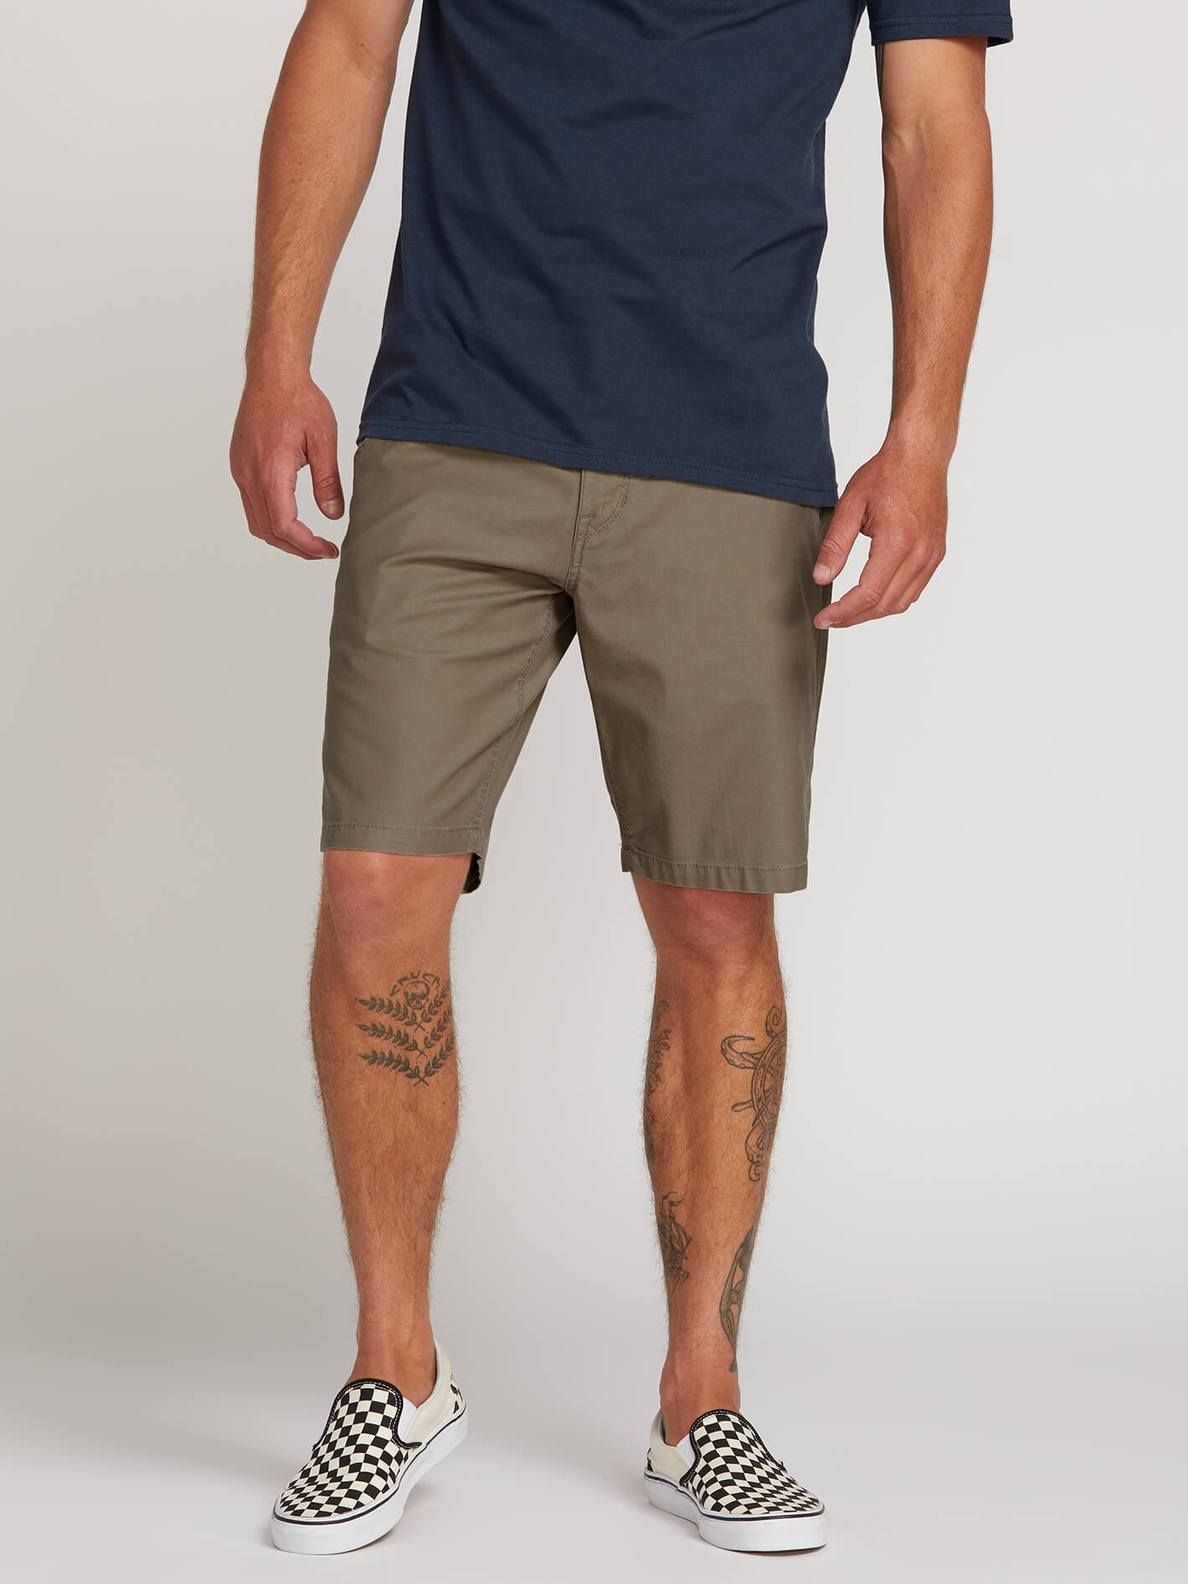 Riser Shorts - Beige - Riser Shorts - Beige -   19 style Mens summer ideas